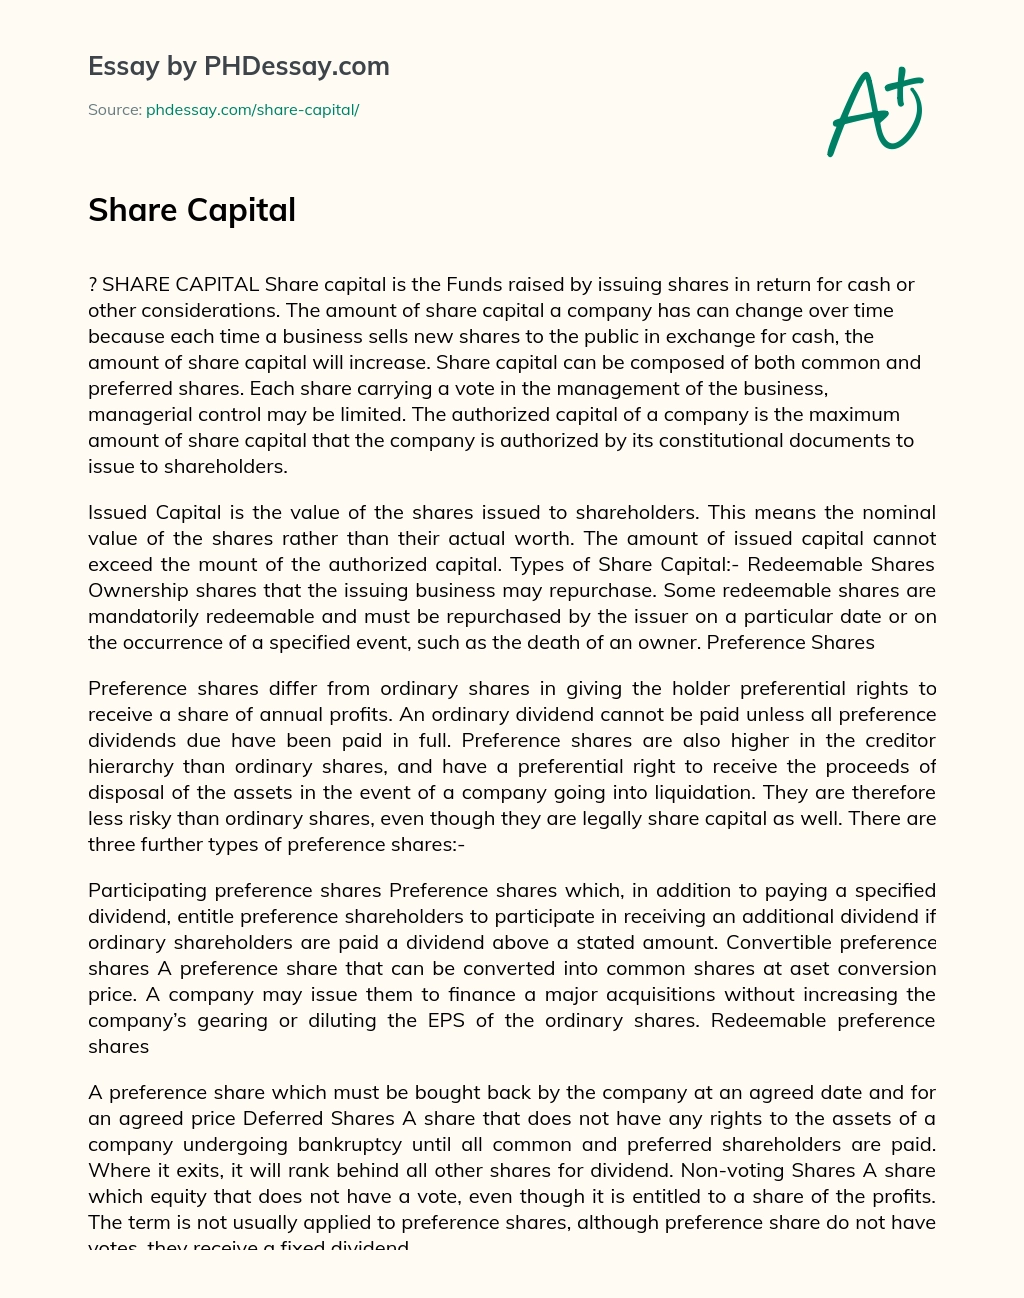 Share Capital essay